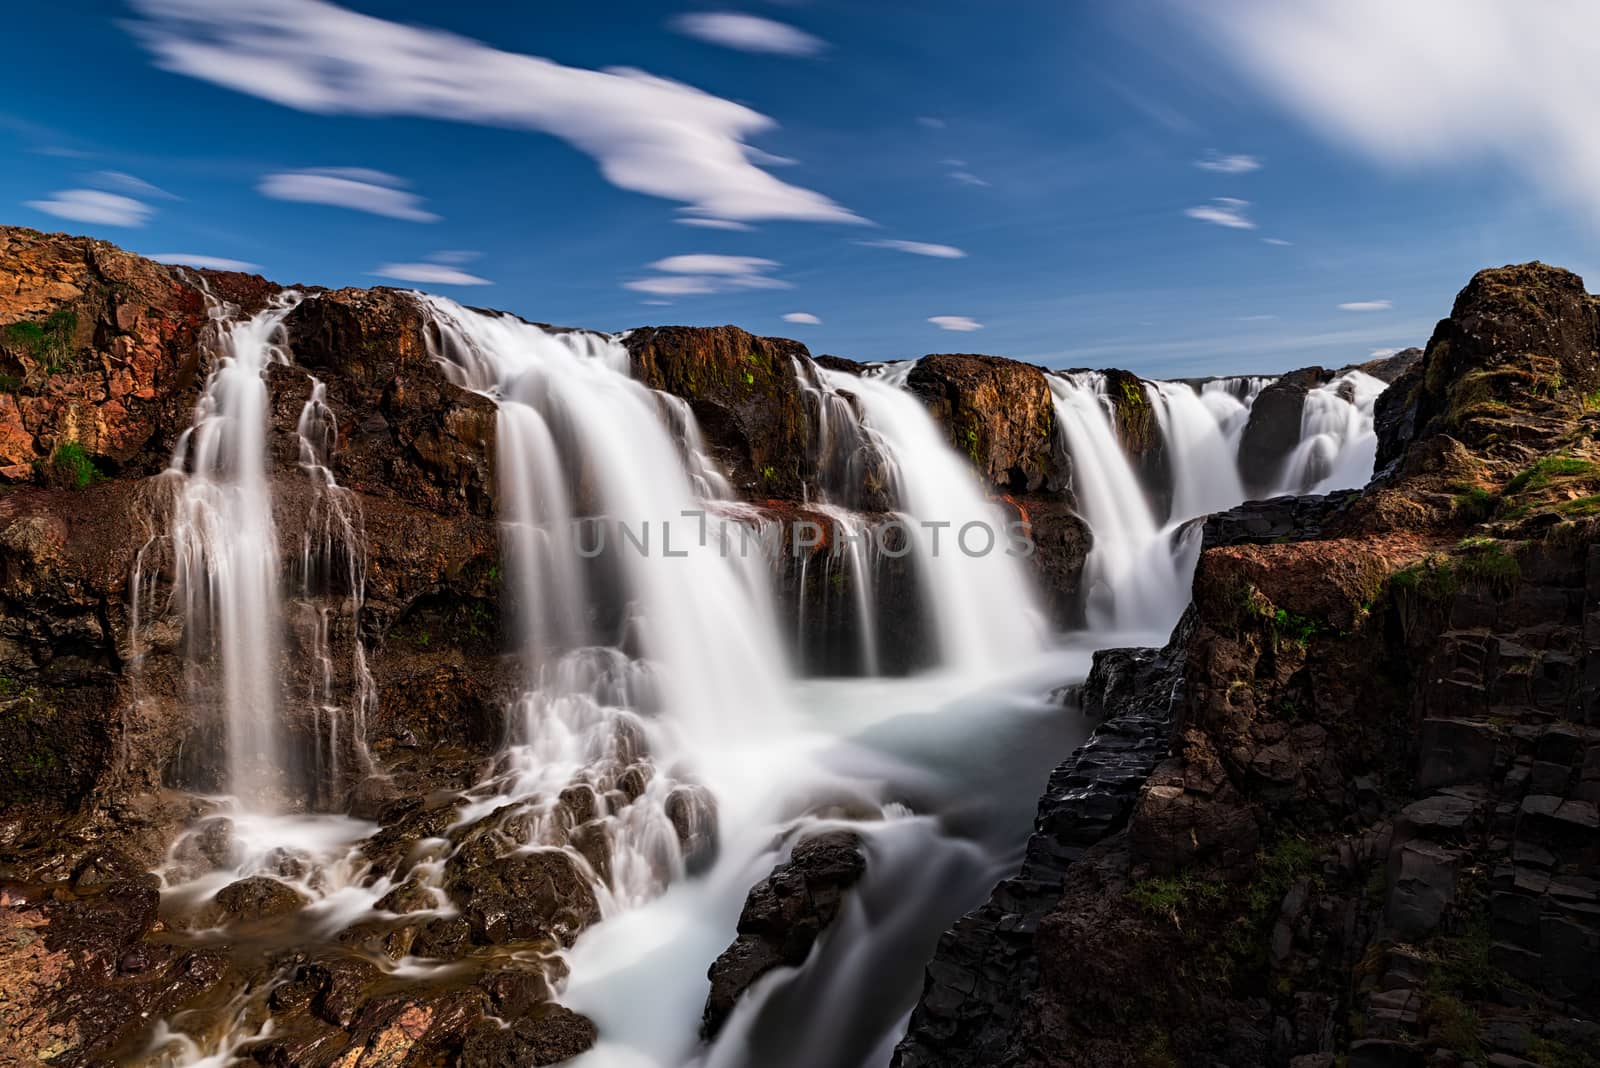 Kolugljufur waterfall in Iceland by LuigiMorbidelli